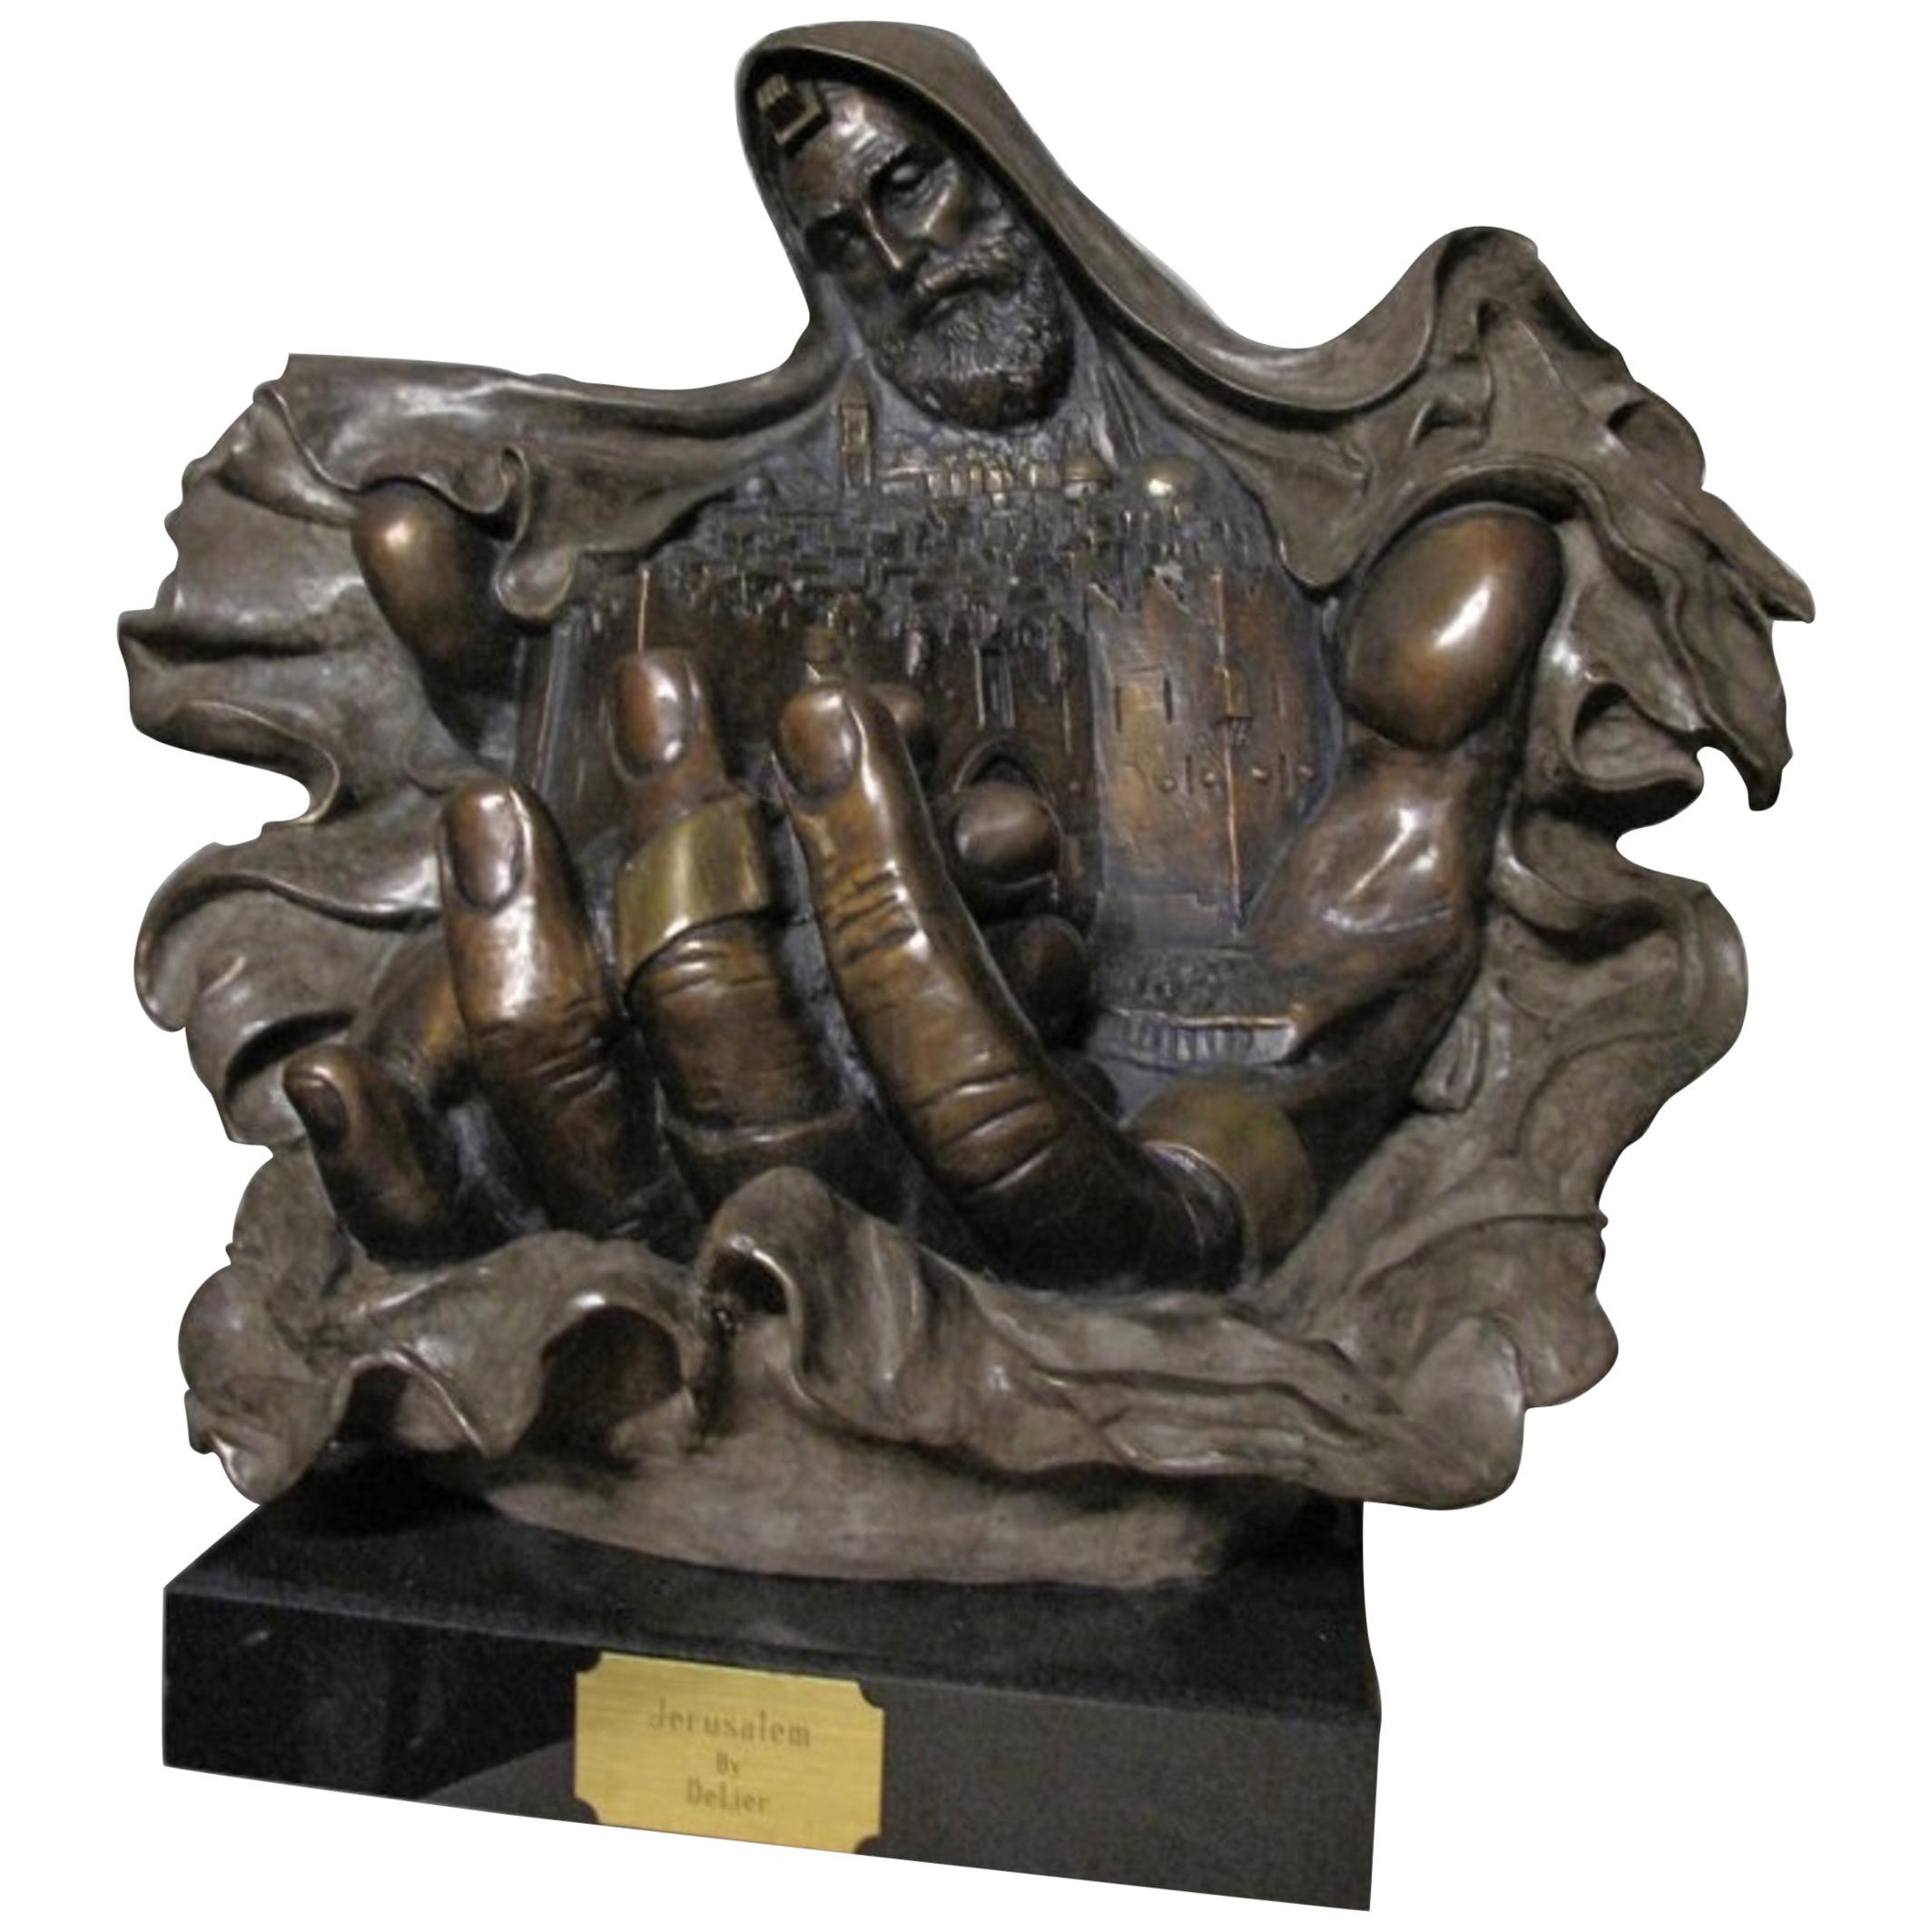 Patinated Bronze Sculpture "Jerusalem" by Delier For Sale